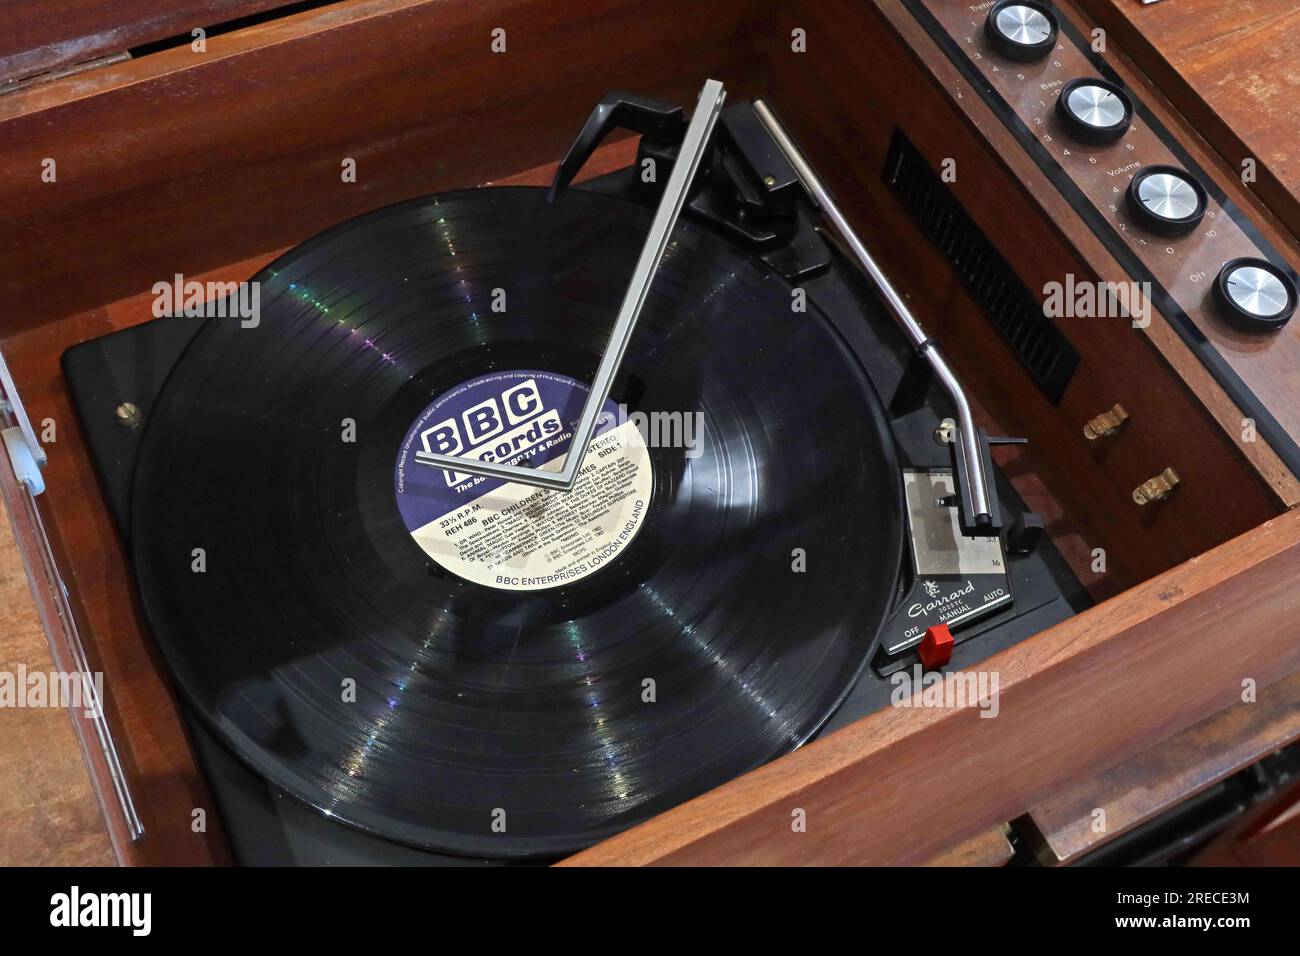 England made, Garrard 2025TC record player, with BBC Records vinyl LP Stock Photo